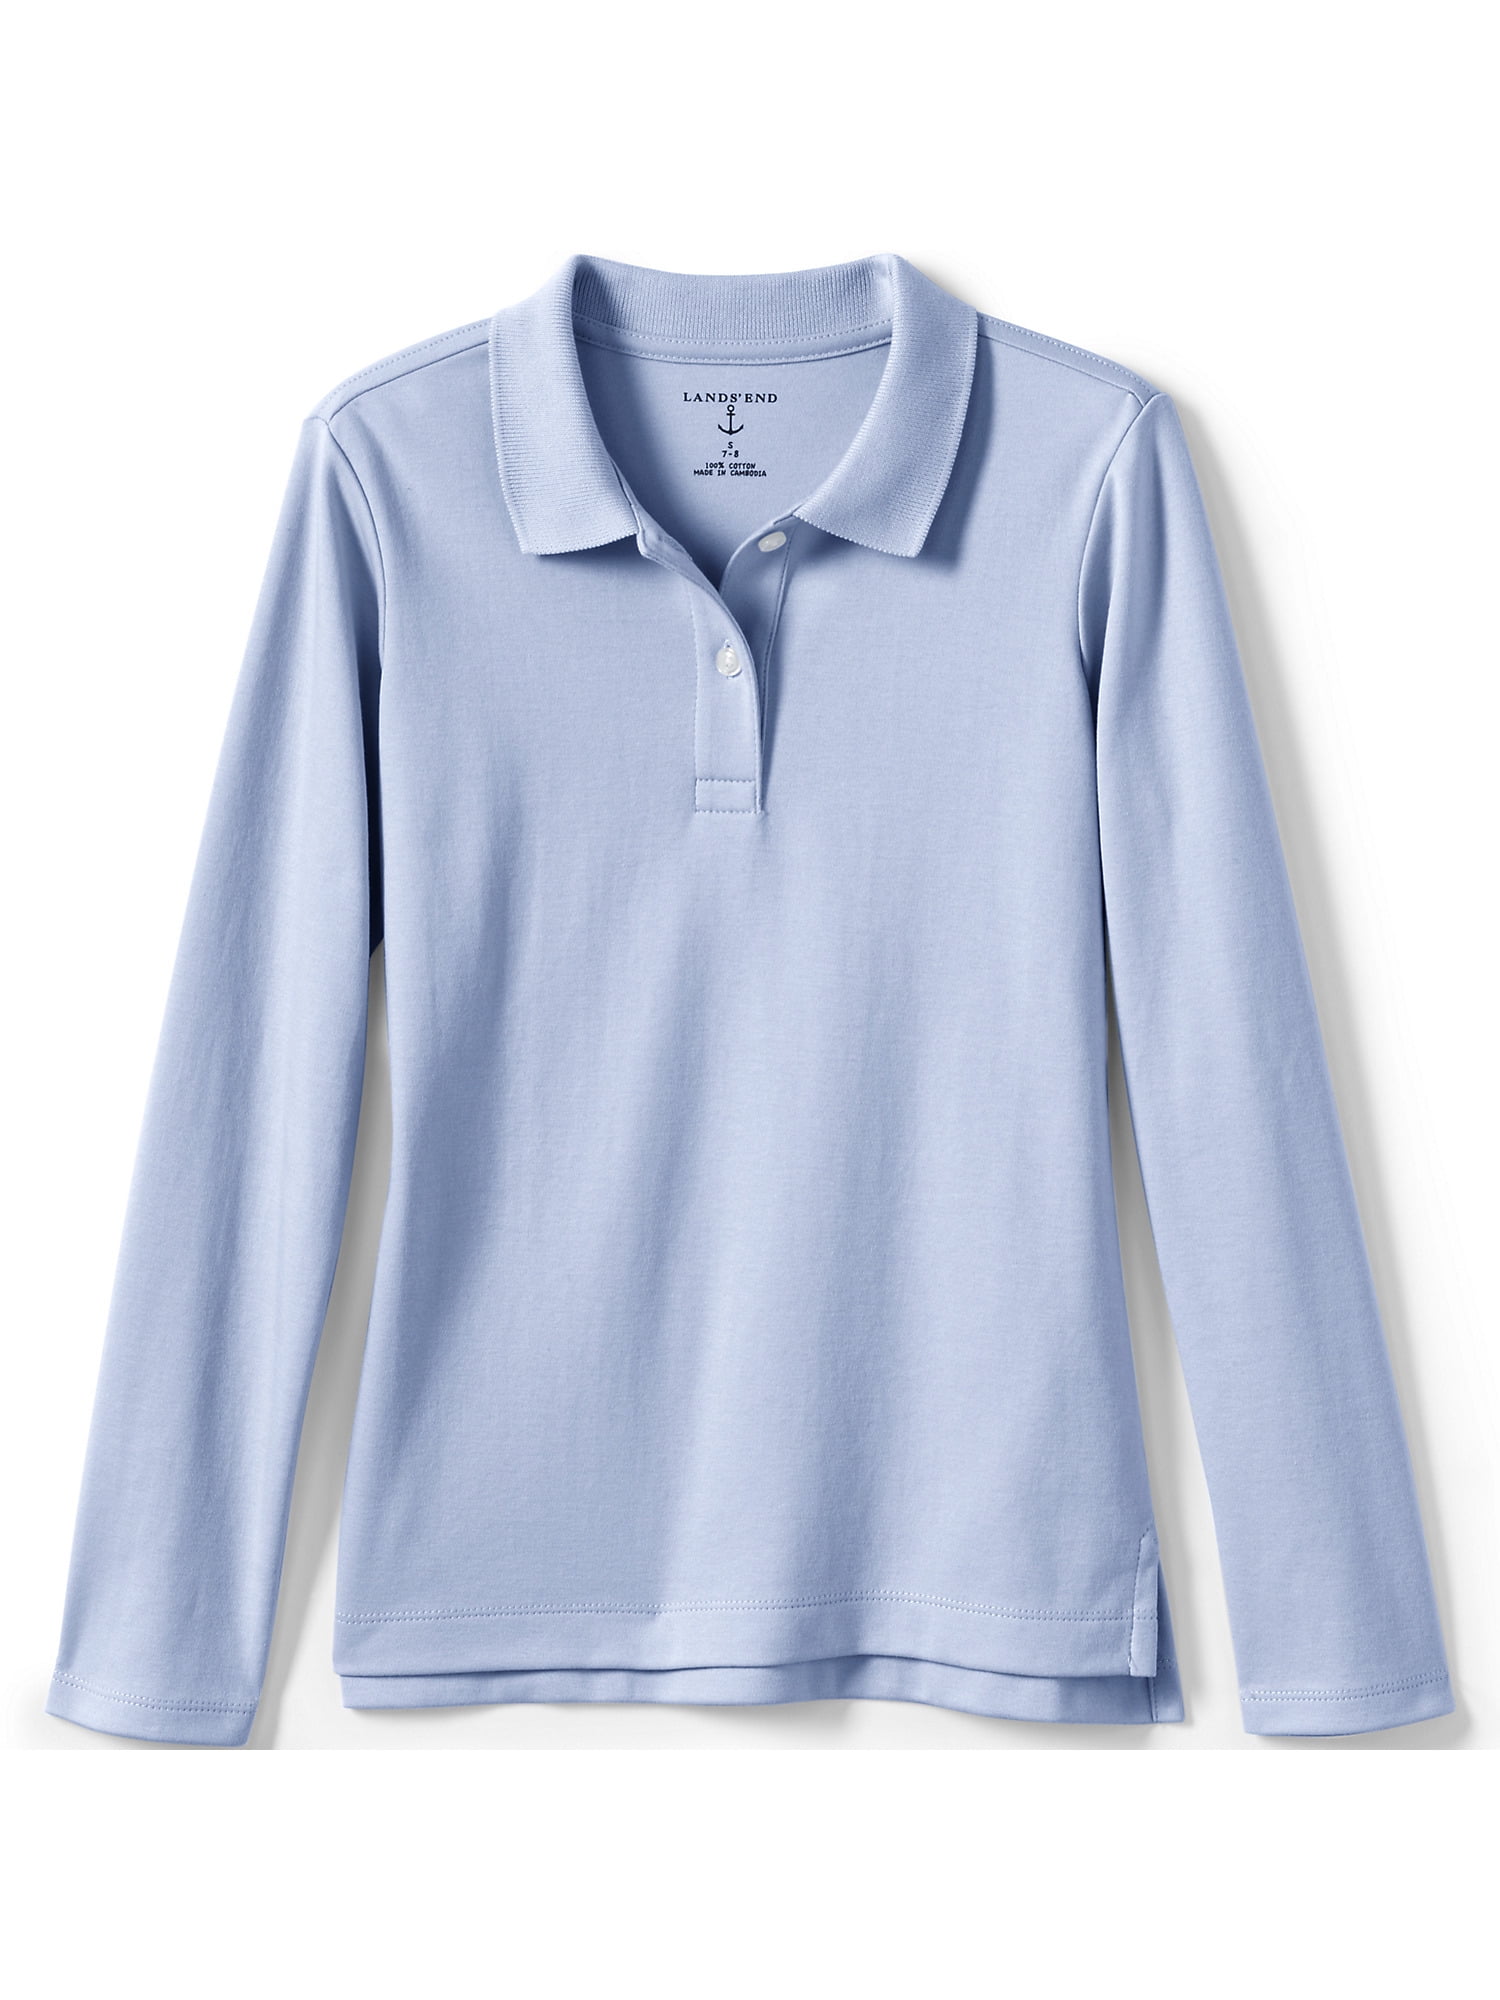 Lands' End School Uniform Women's Long Sleeve Interlock Polo Shirt